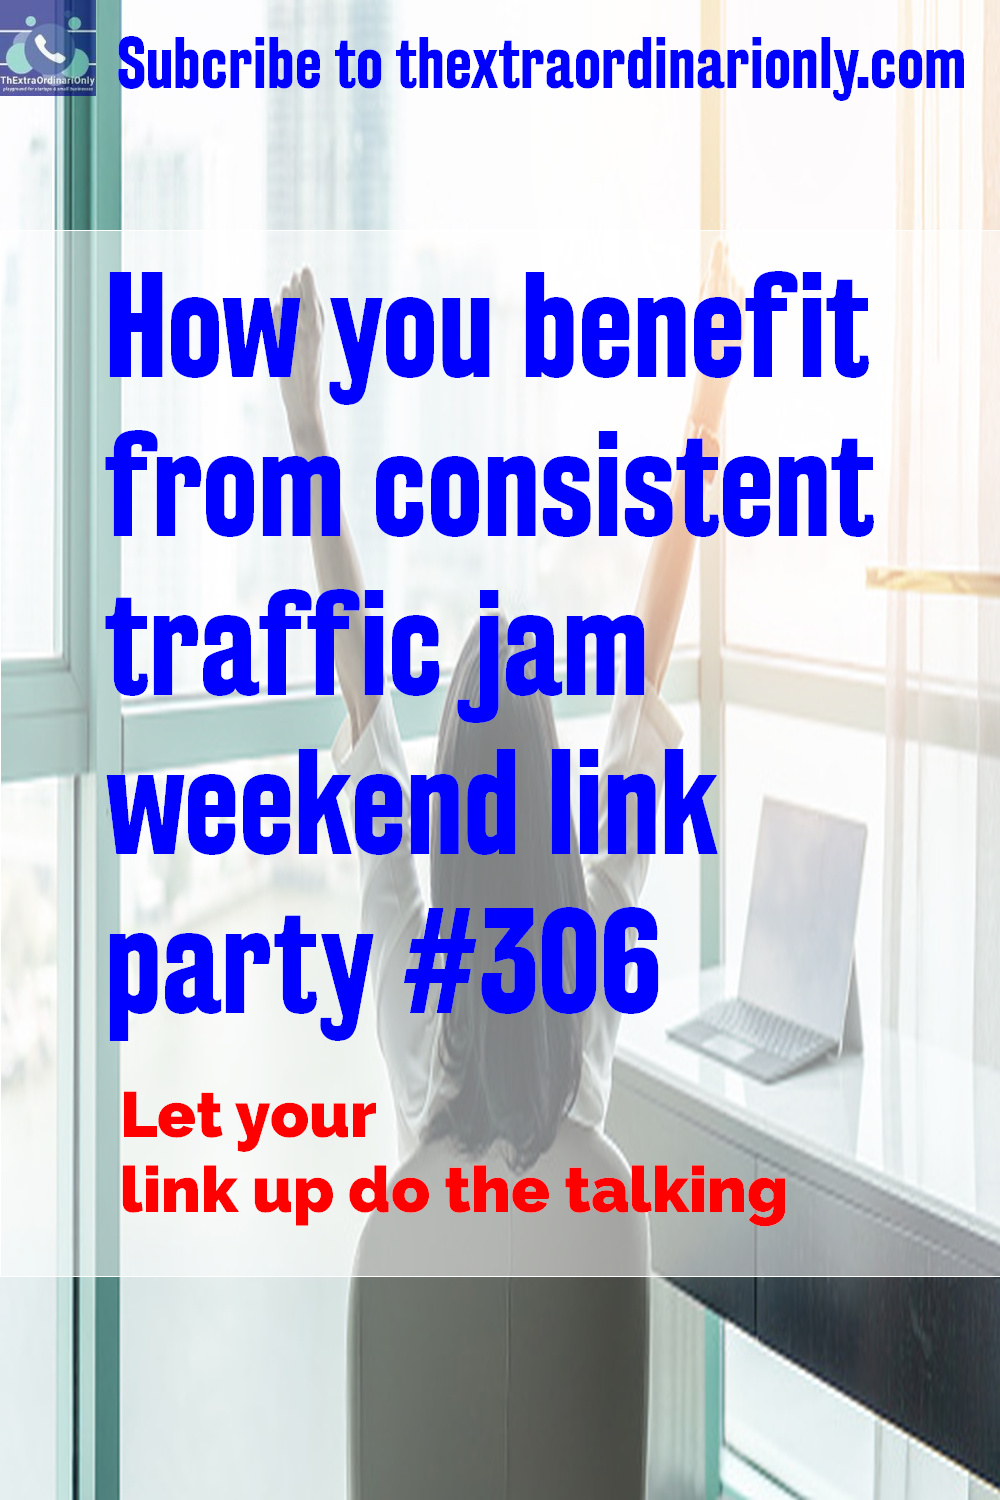 enjoy benefits galore of traffic jam weekend link party #306